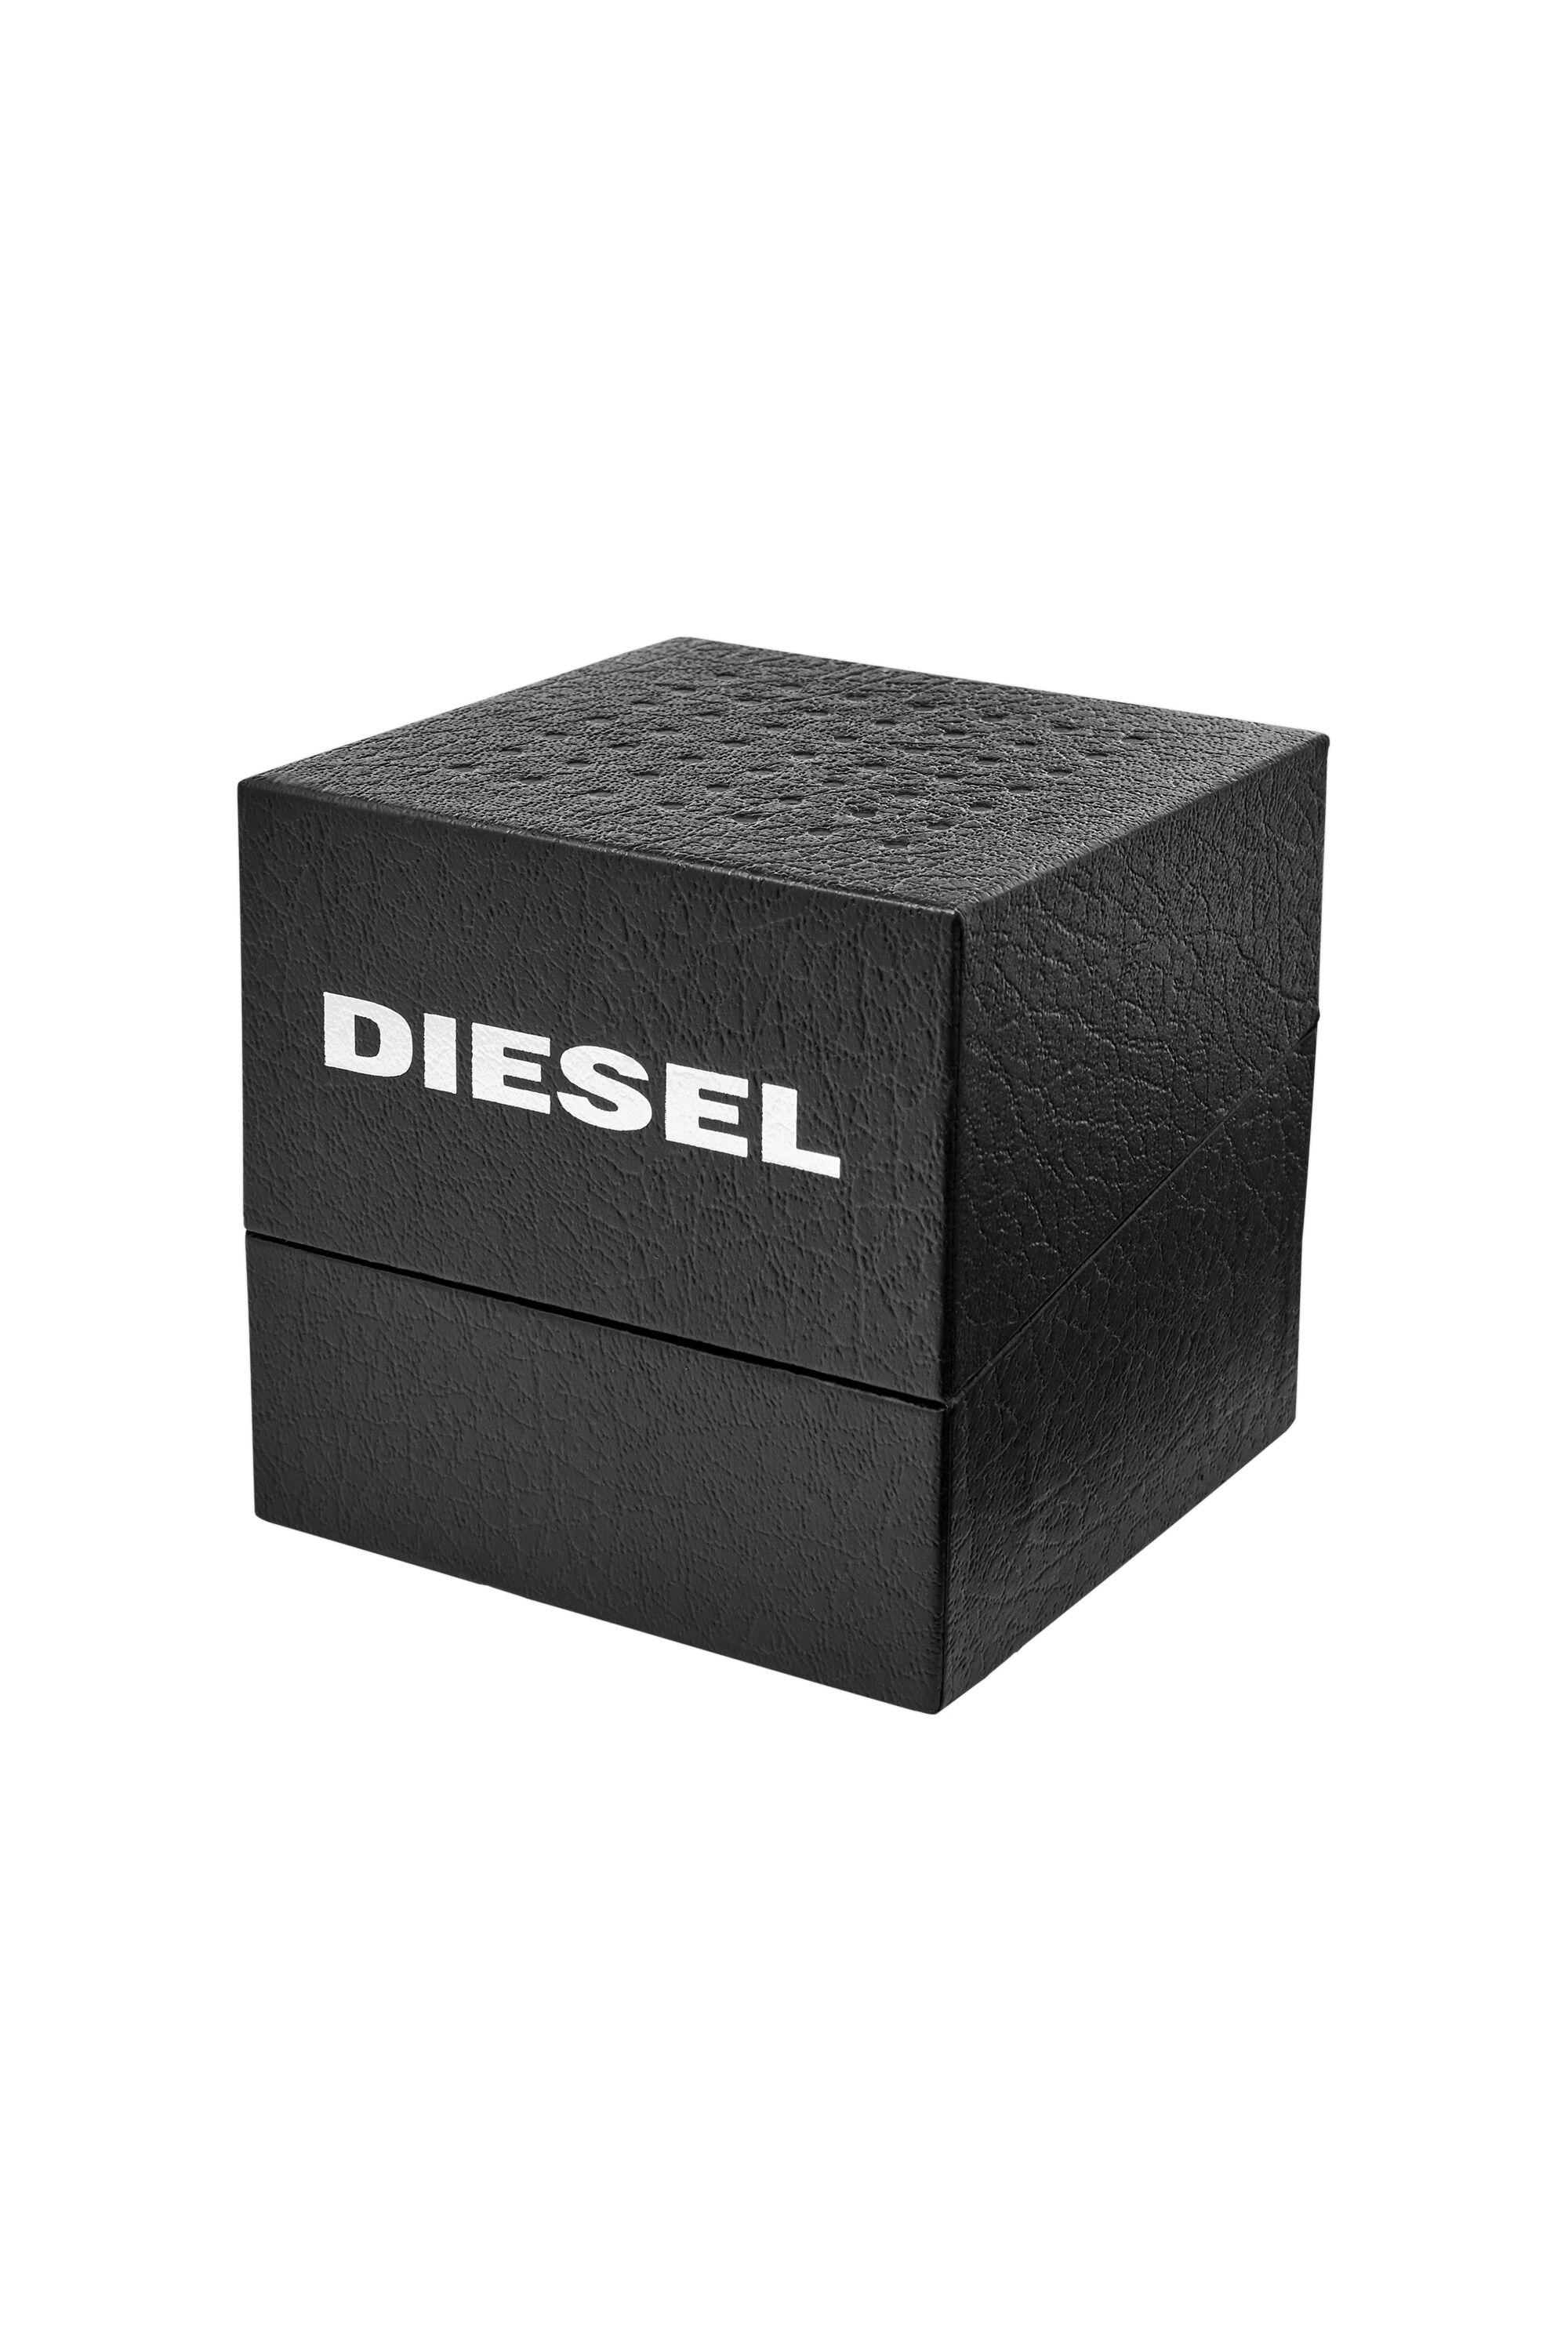 Diesel - DZ1906, Black - Image 6